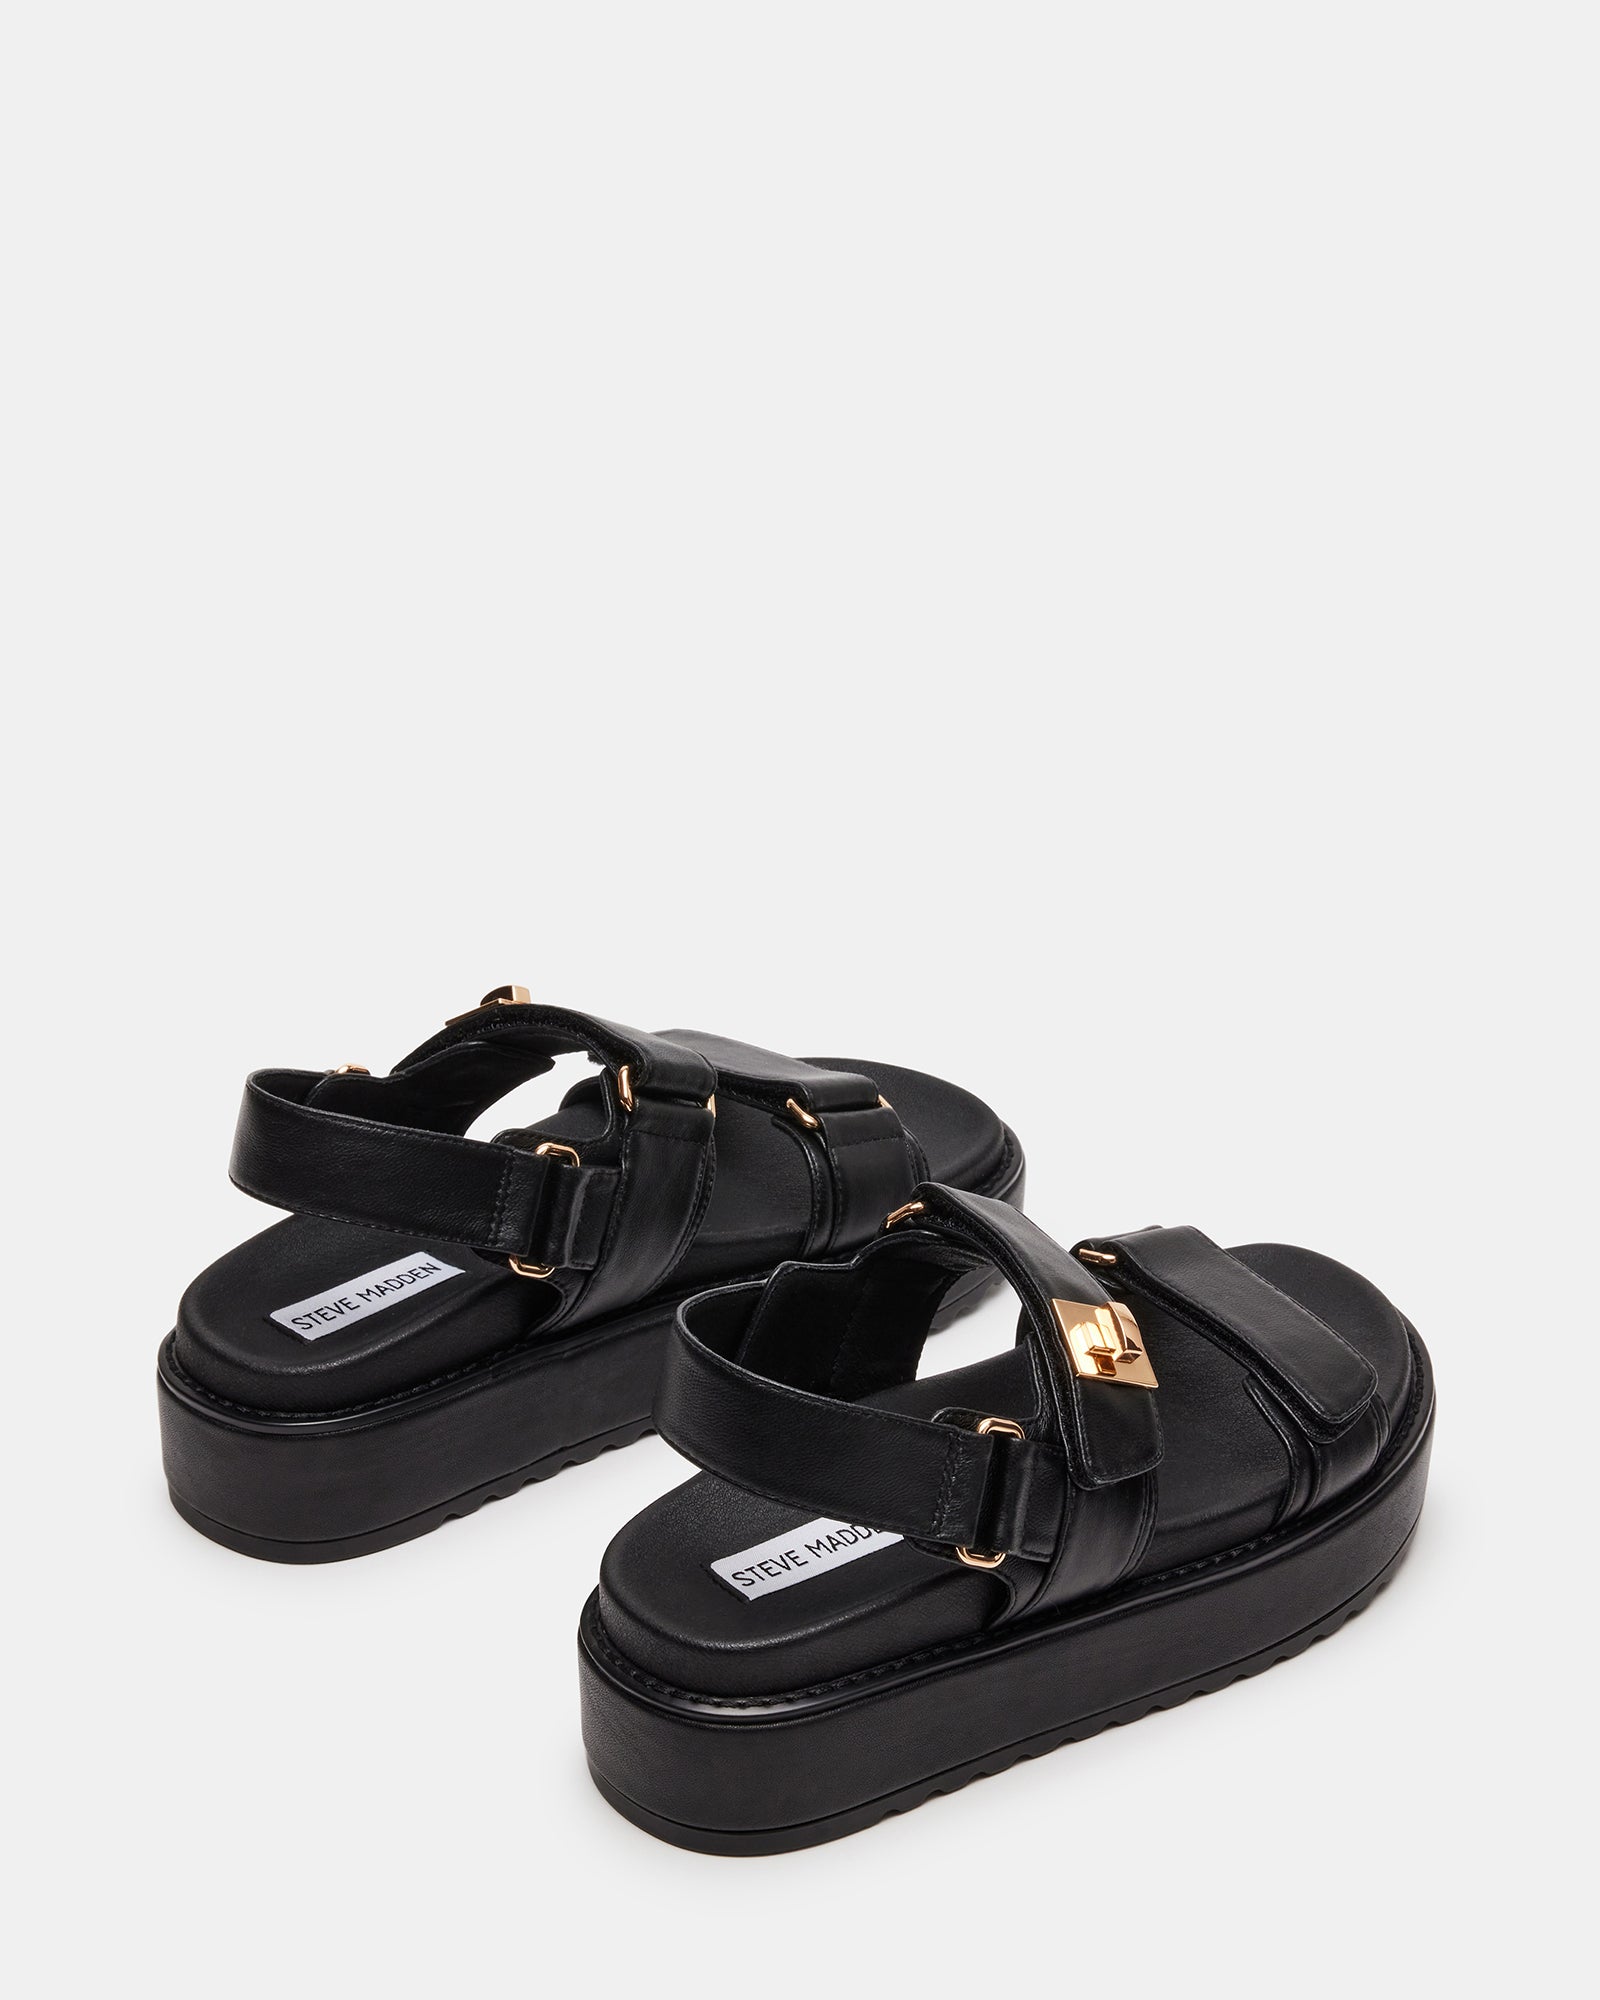 BIGMONA Black Leather Platform Sandal | Women's Sandals – Steve Madden